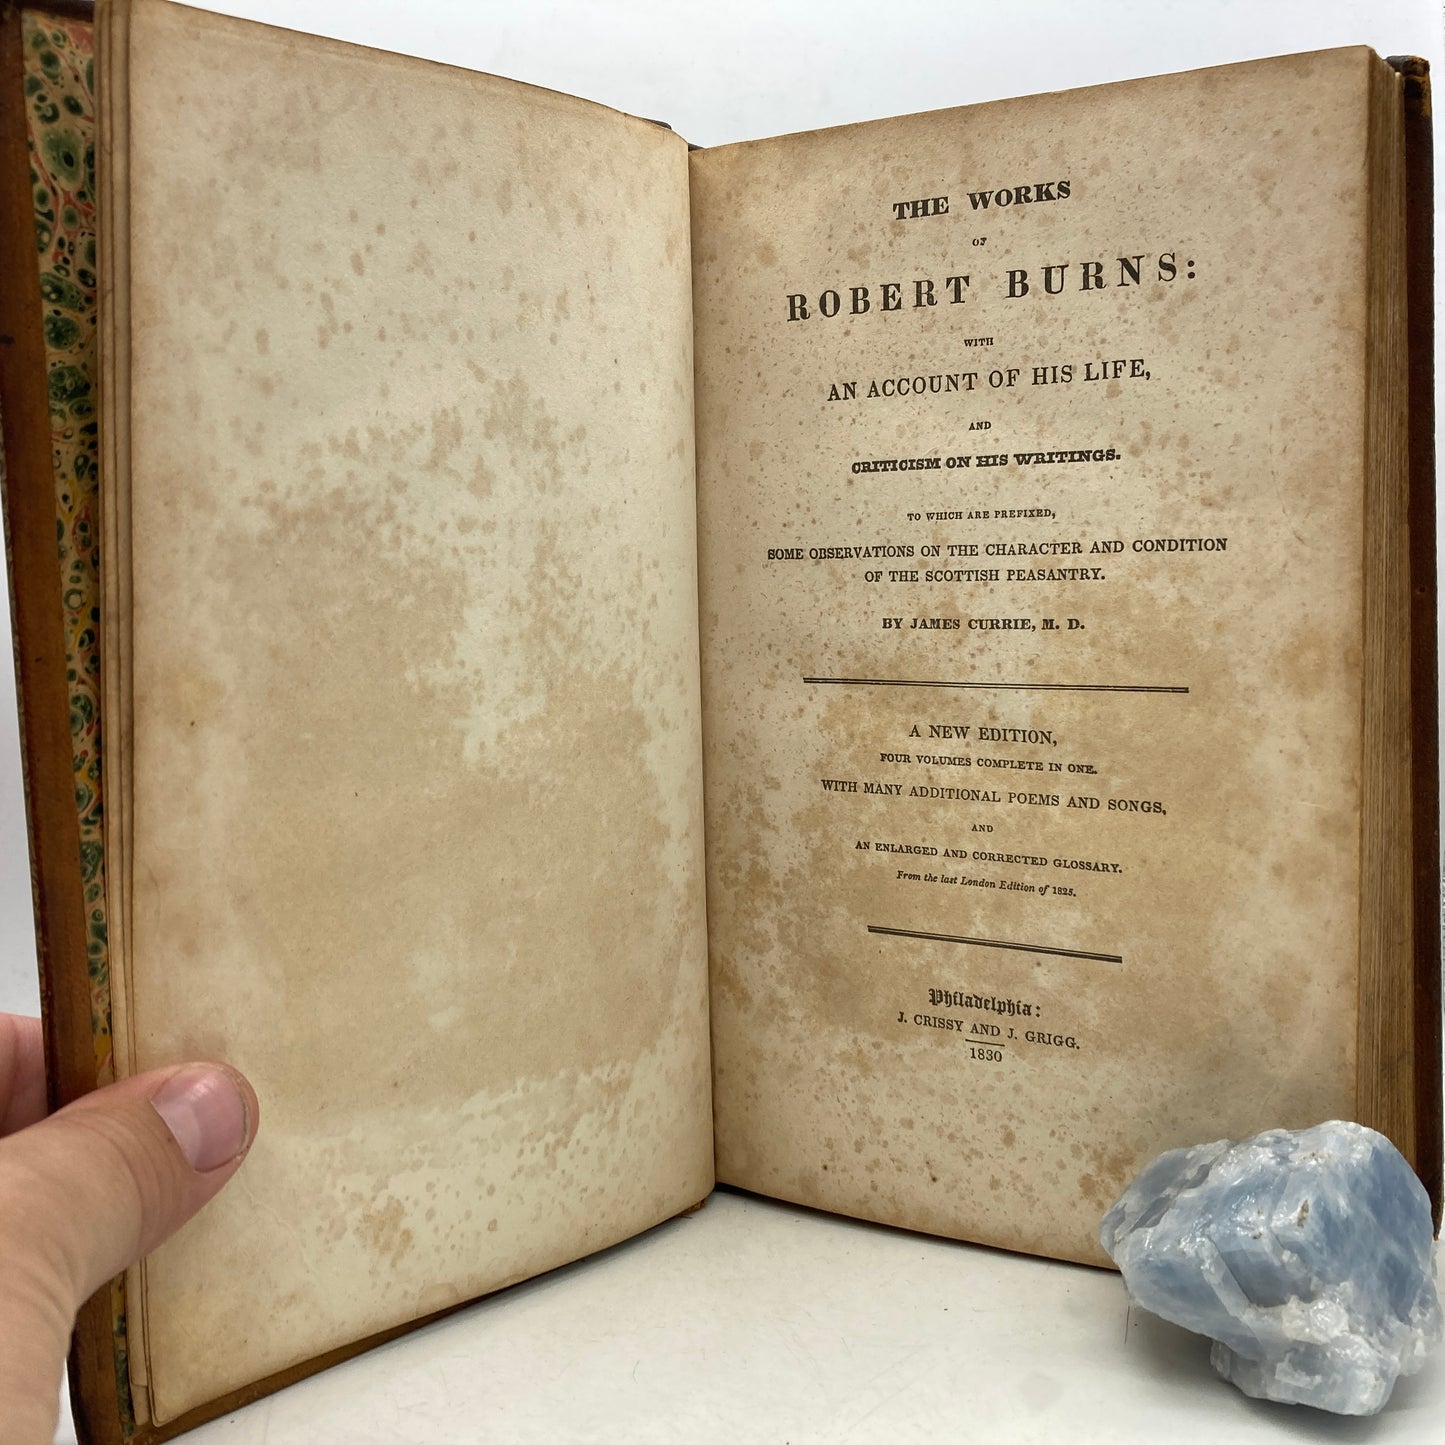 BURNS, Robert "The Works of Robert Burns" [J. Crissy and J. Grigg, 1830]